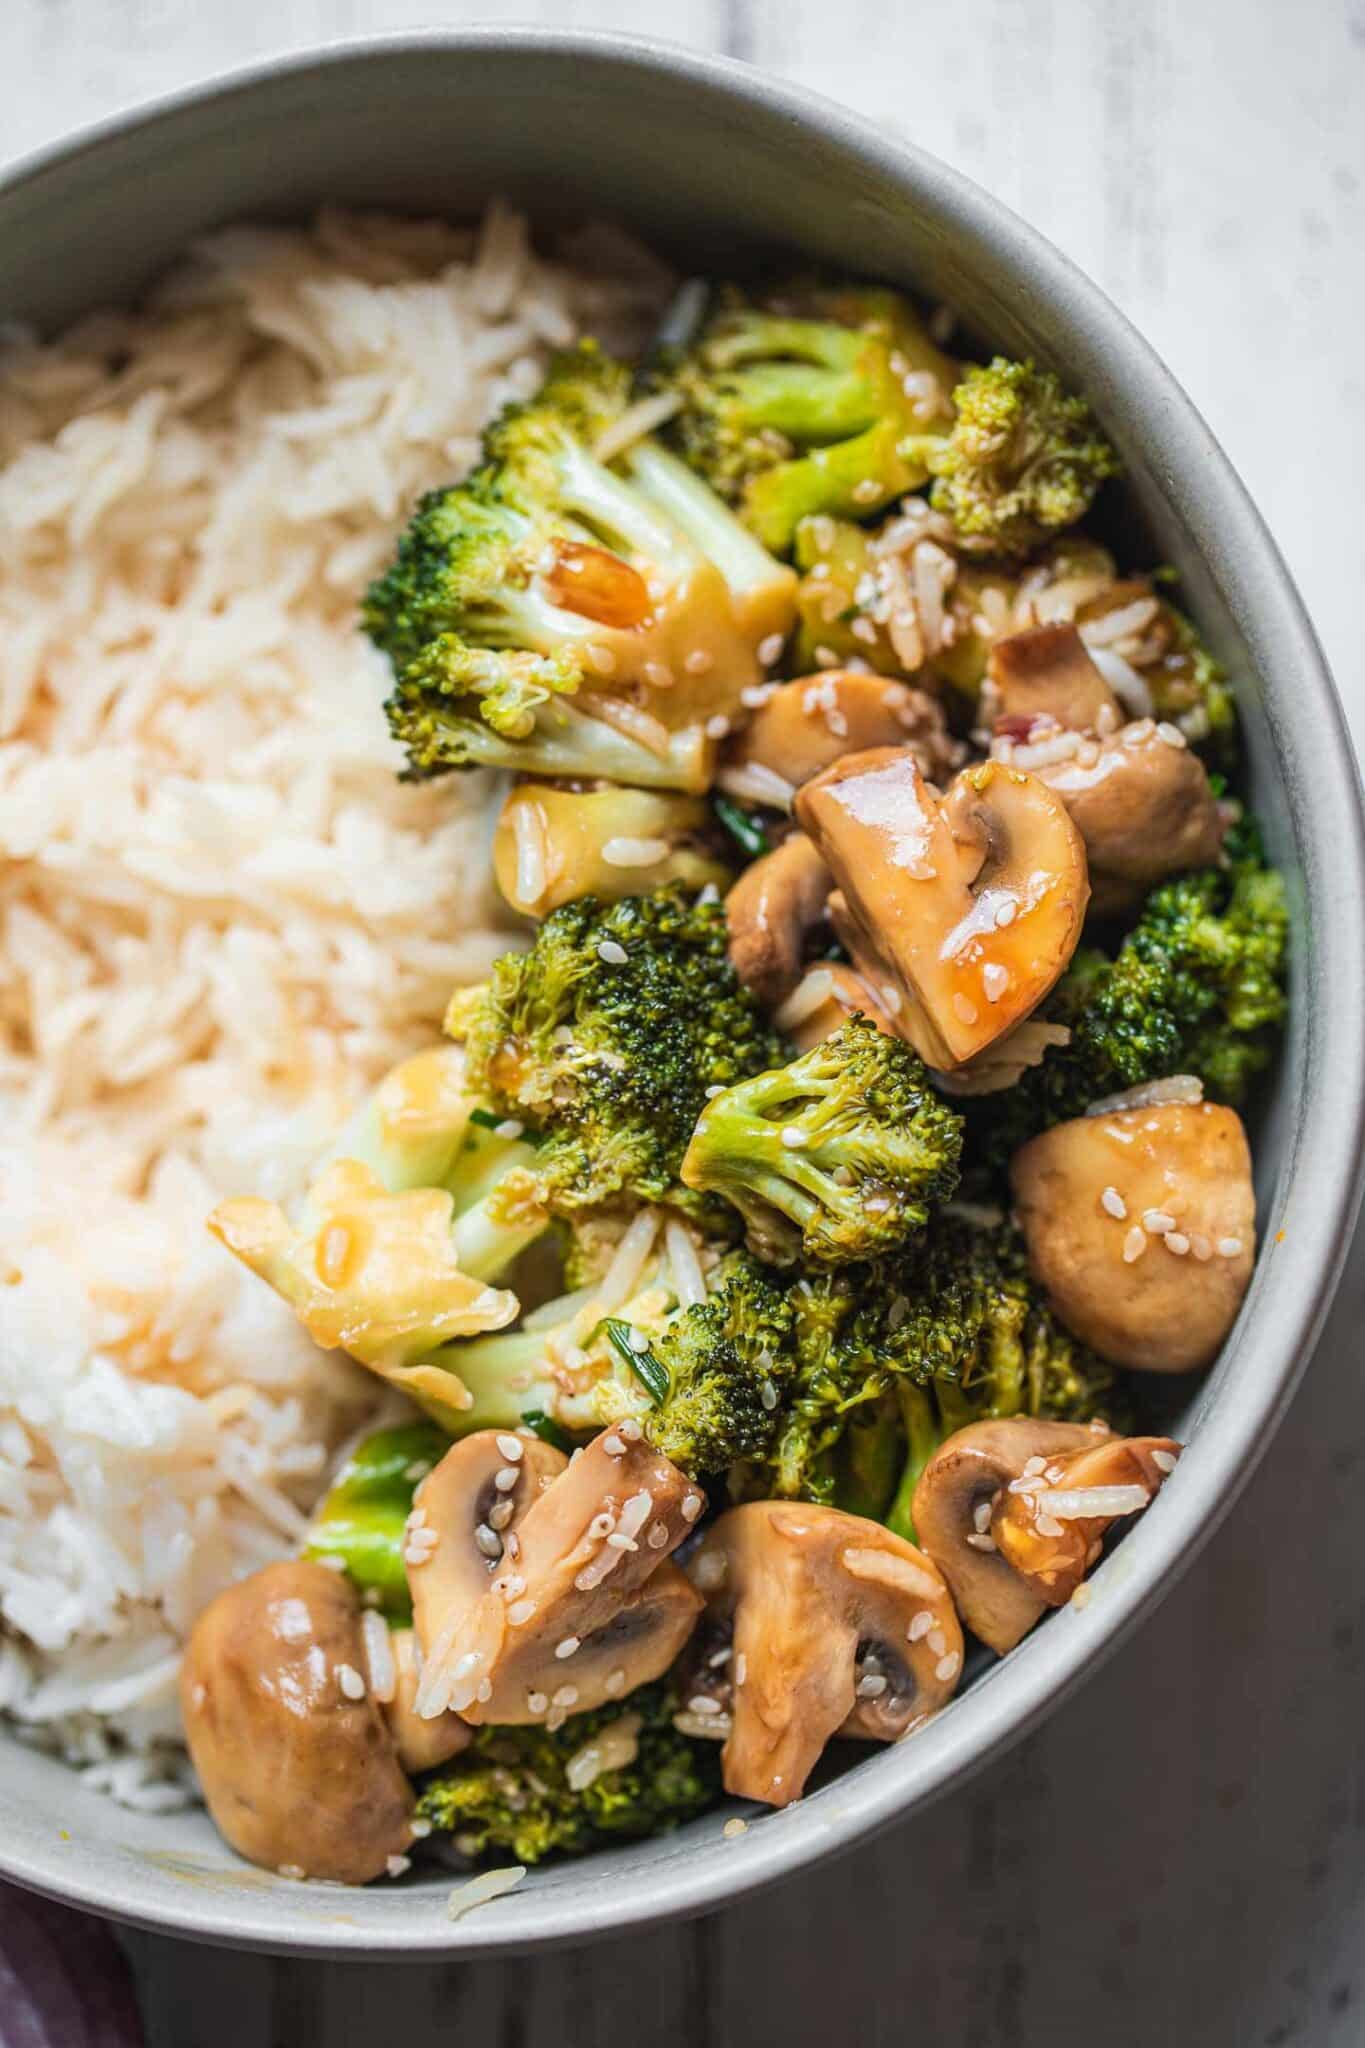 Simple Vegan Broccoli Stir-fry - Oh My Veggies